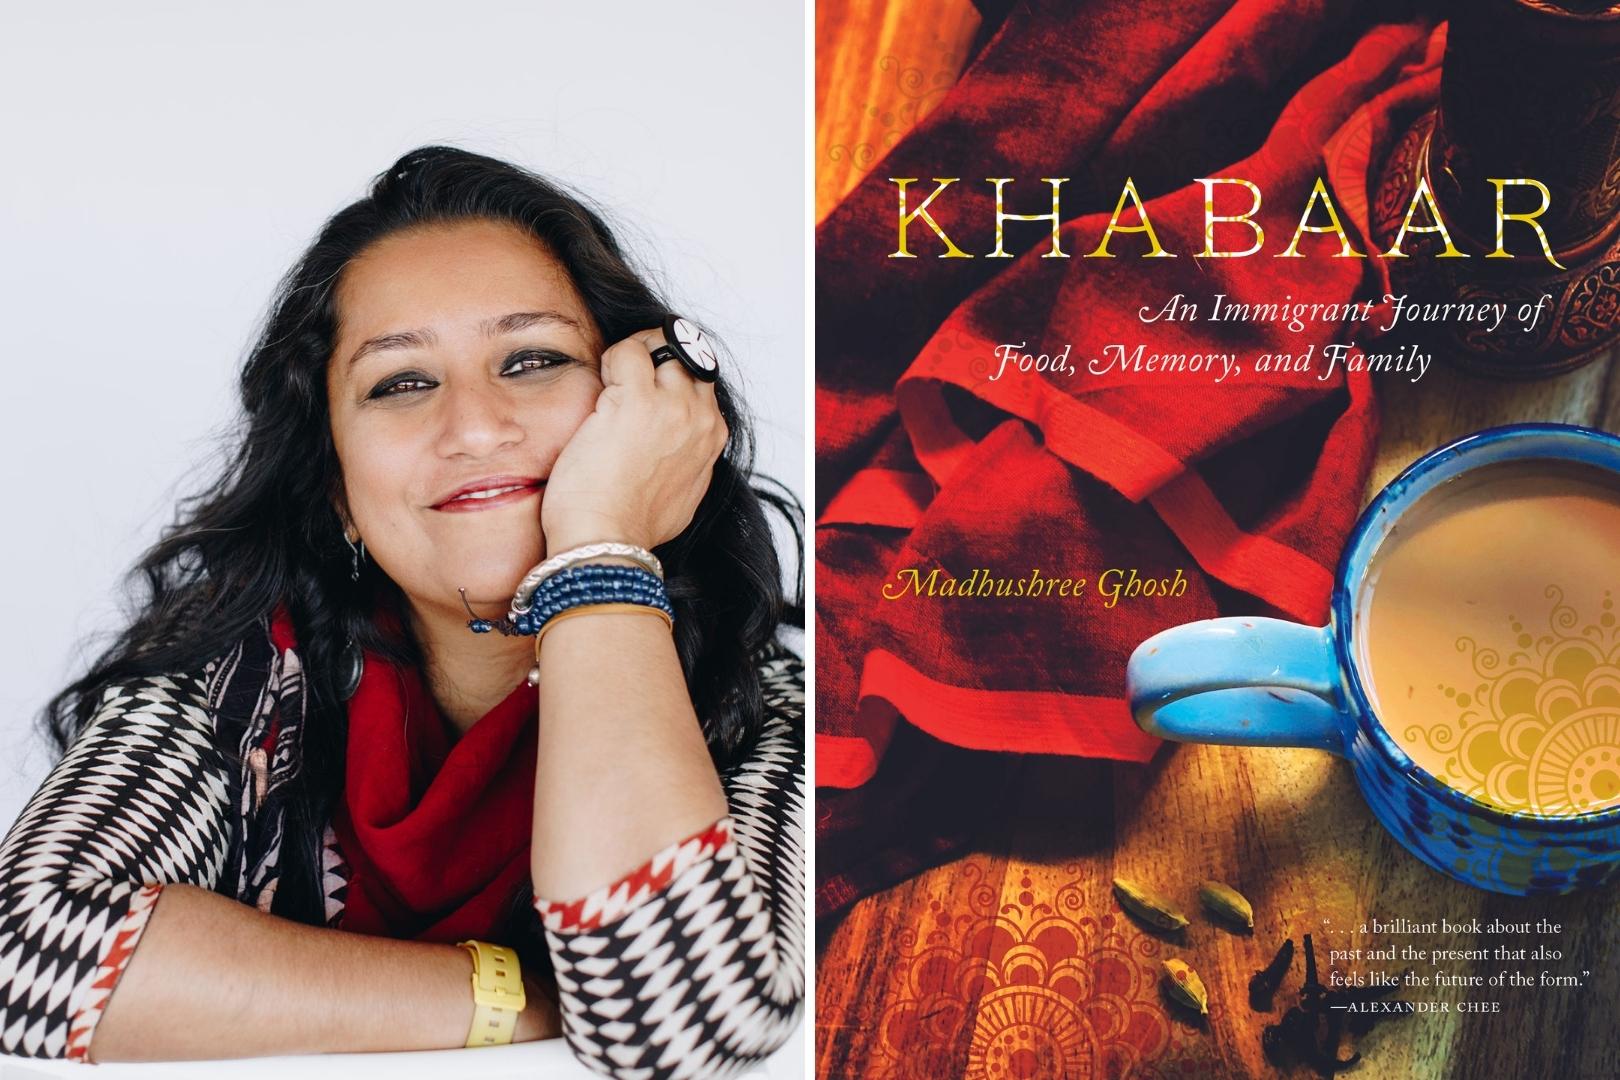 Q&A with Madhushree Ghosh, Author of Khabaar